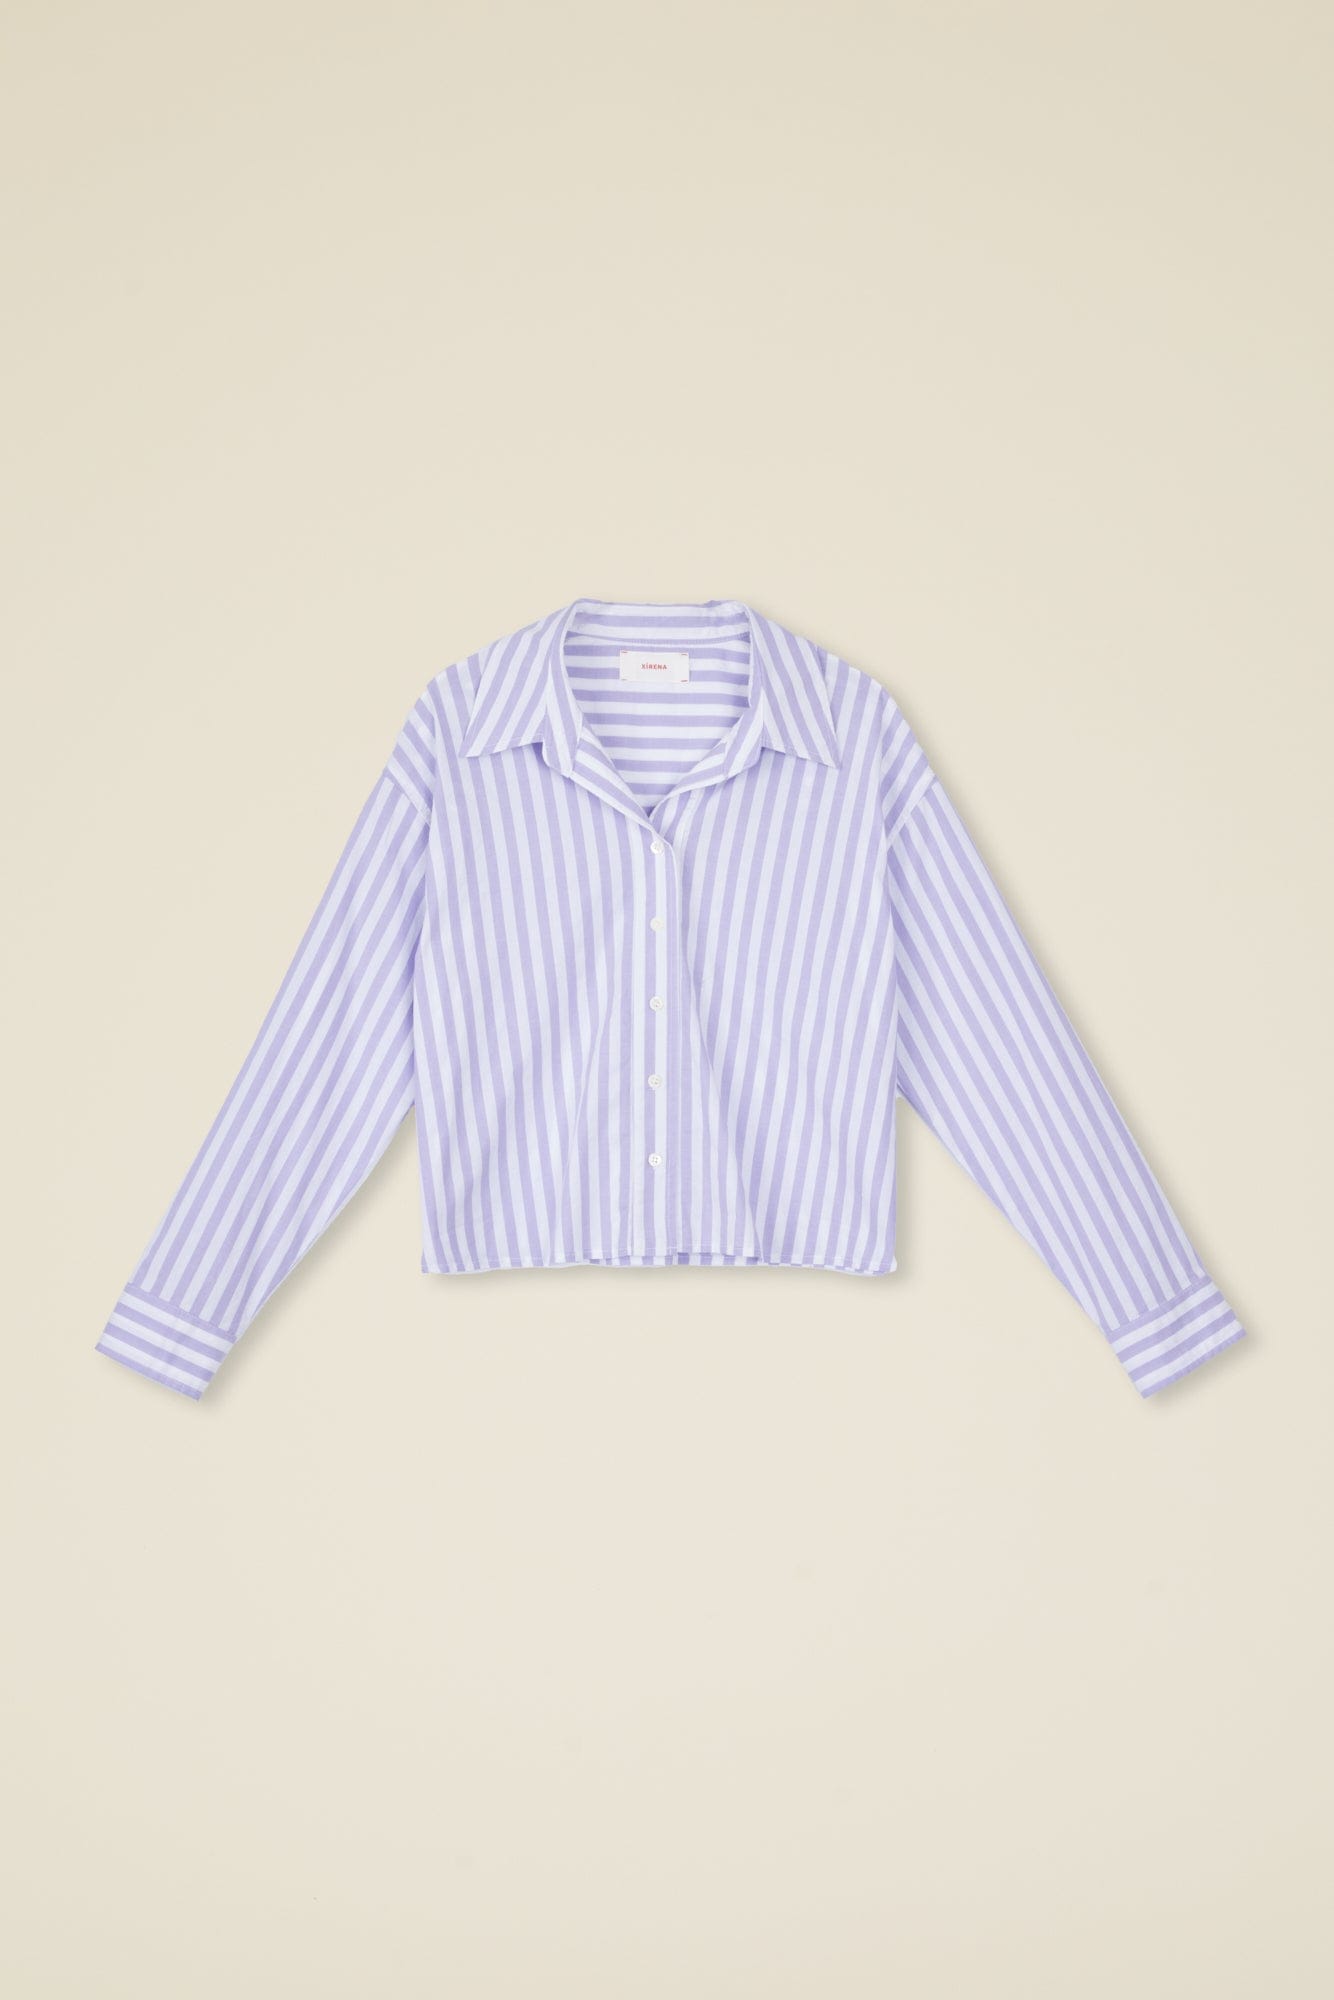 Xirena Shirt Amethyst Stripe Morgan Shirt